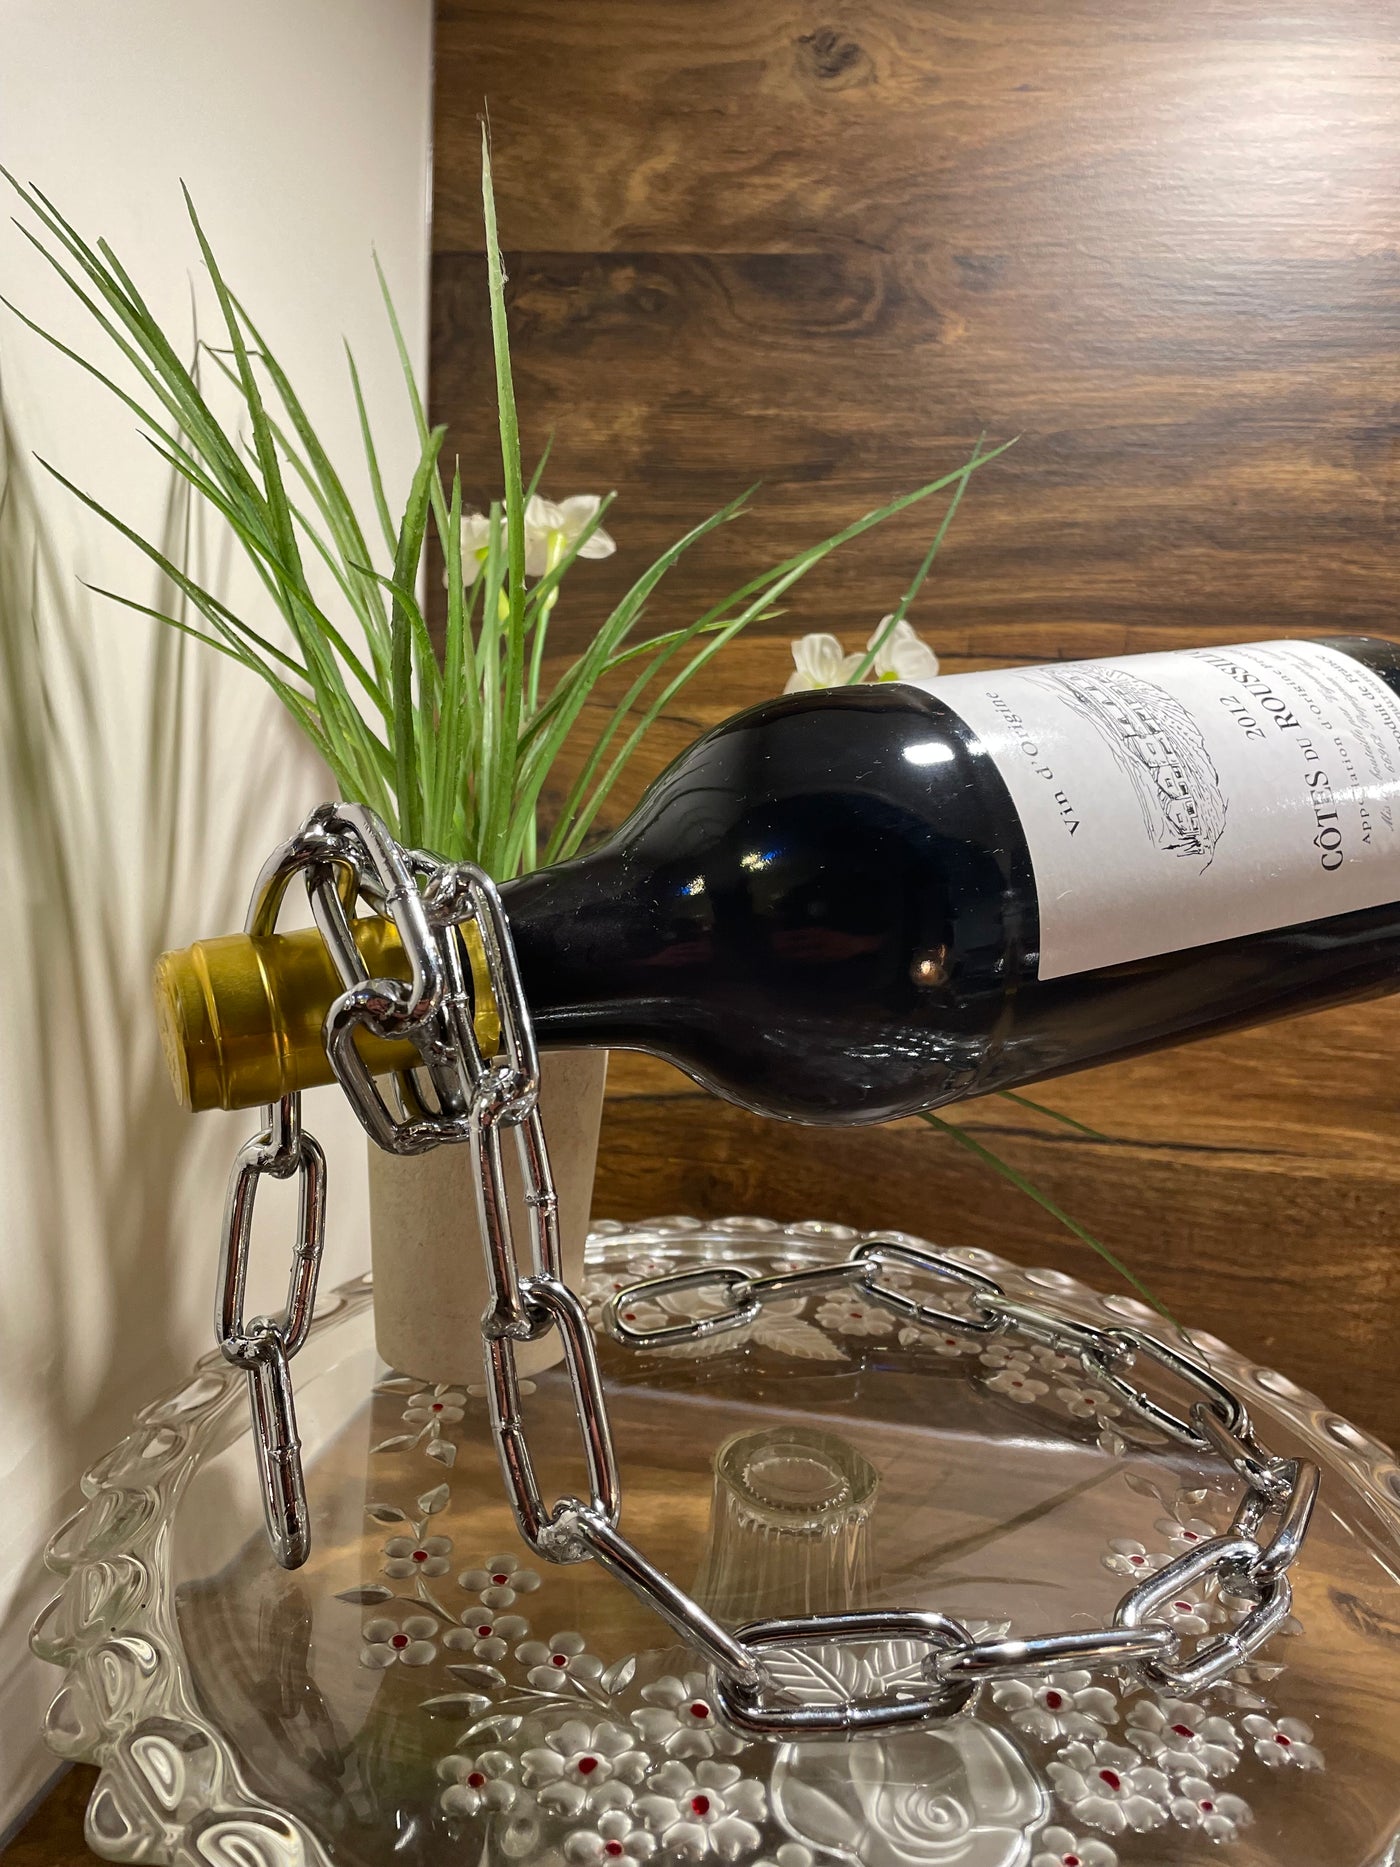 PracticalLiving - modern metal wine holder, wine rack 